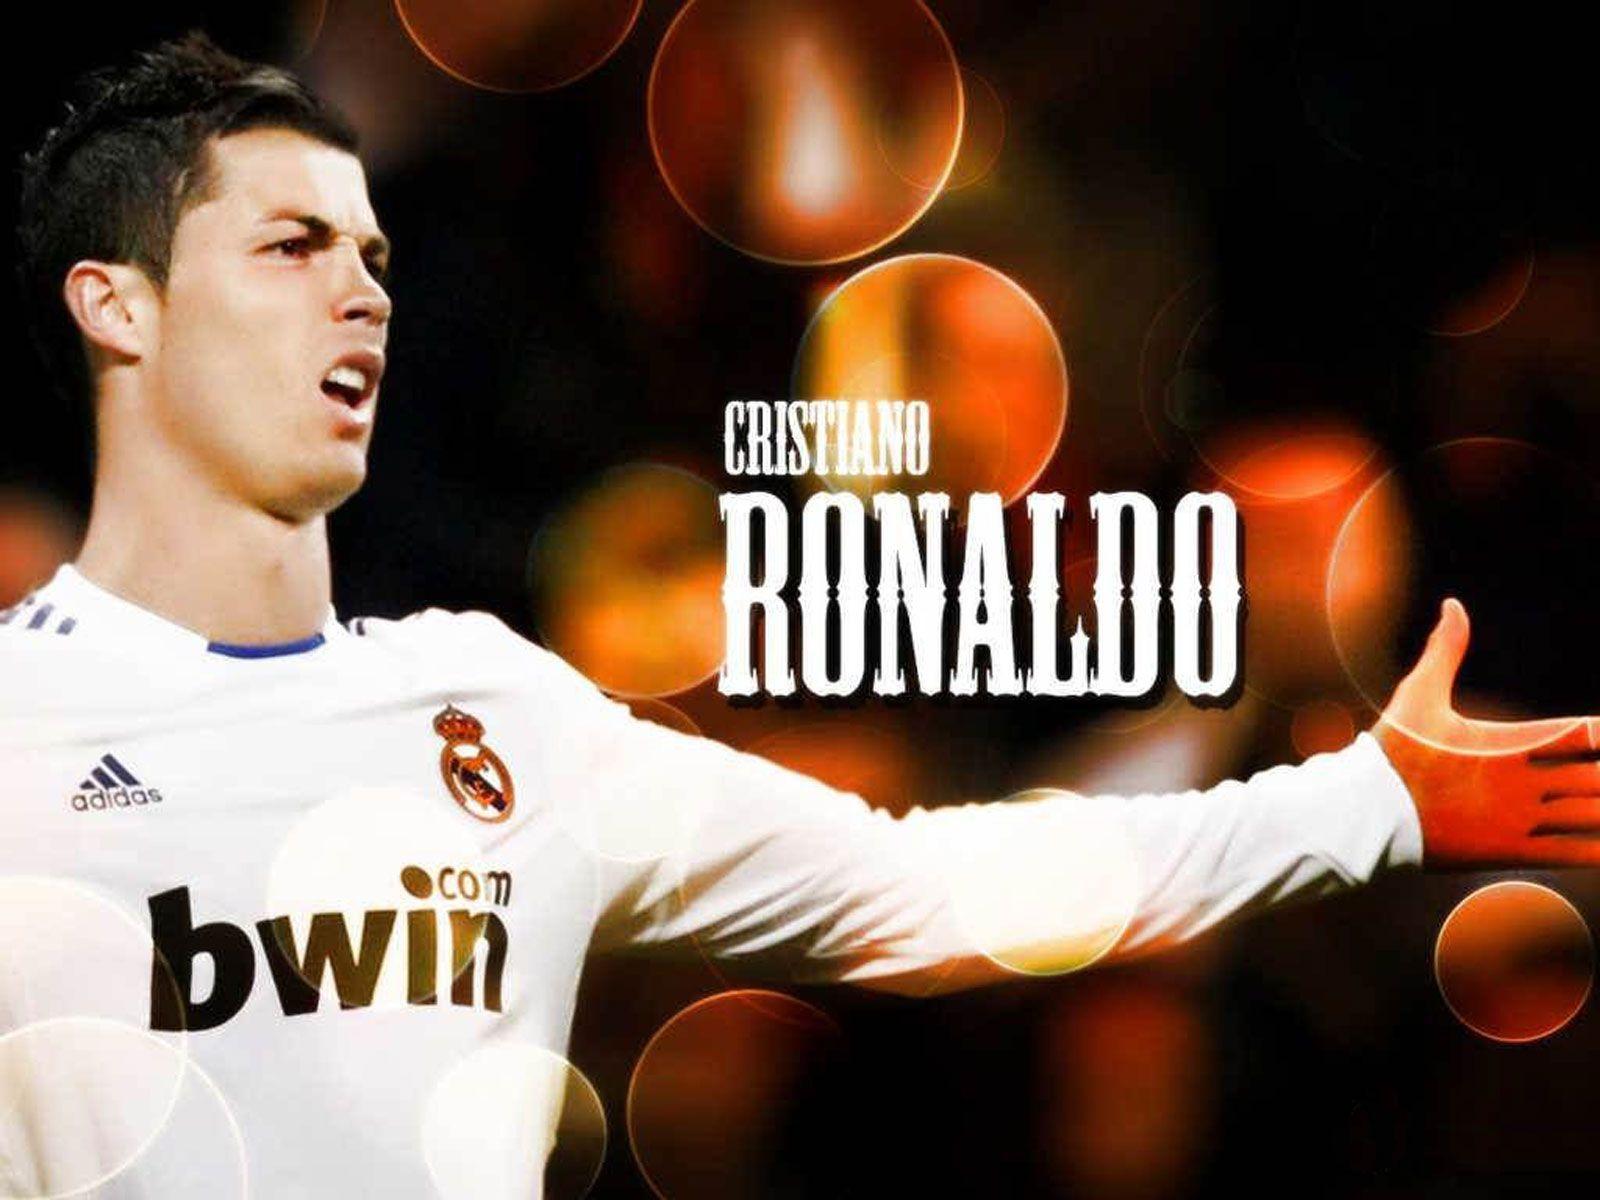 Cristiano Ronaldo Kick Ball Wallpaper Photo Wallpaper